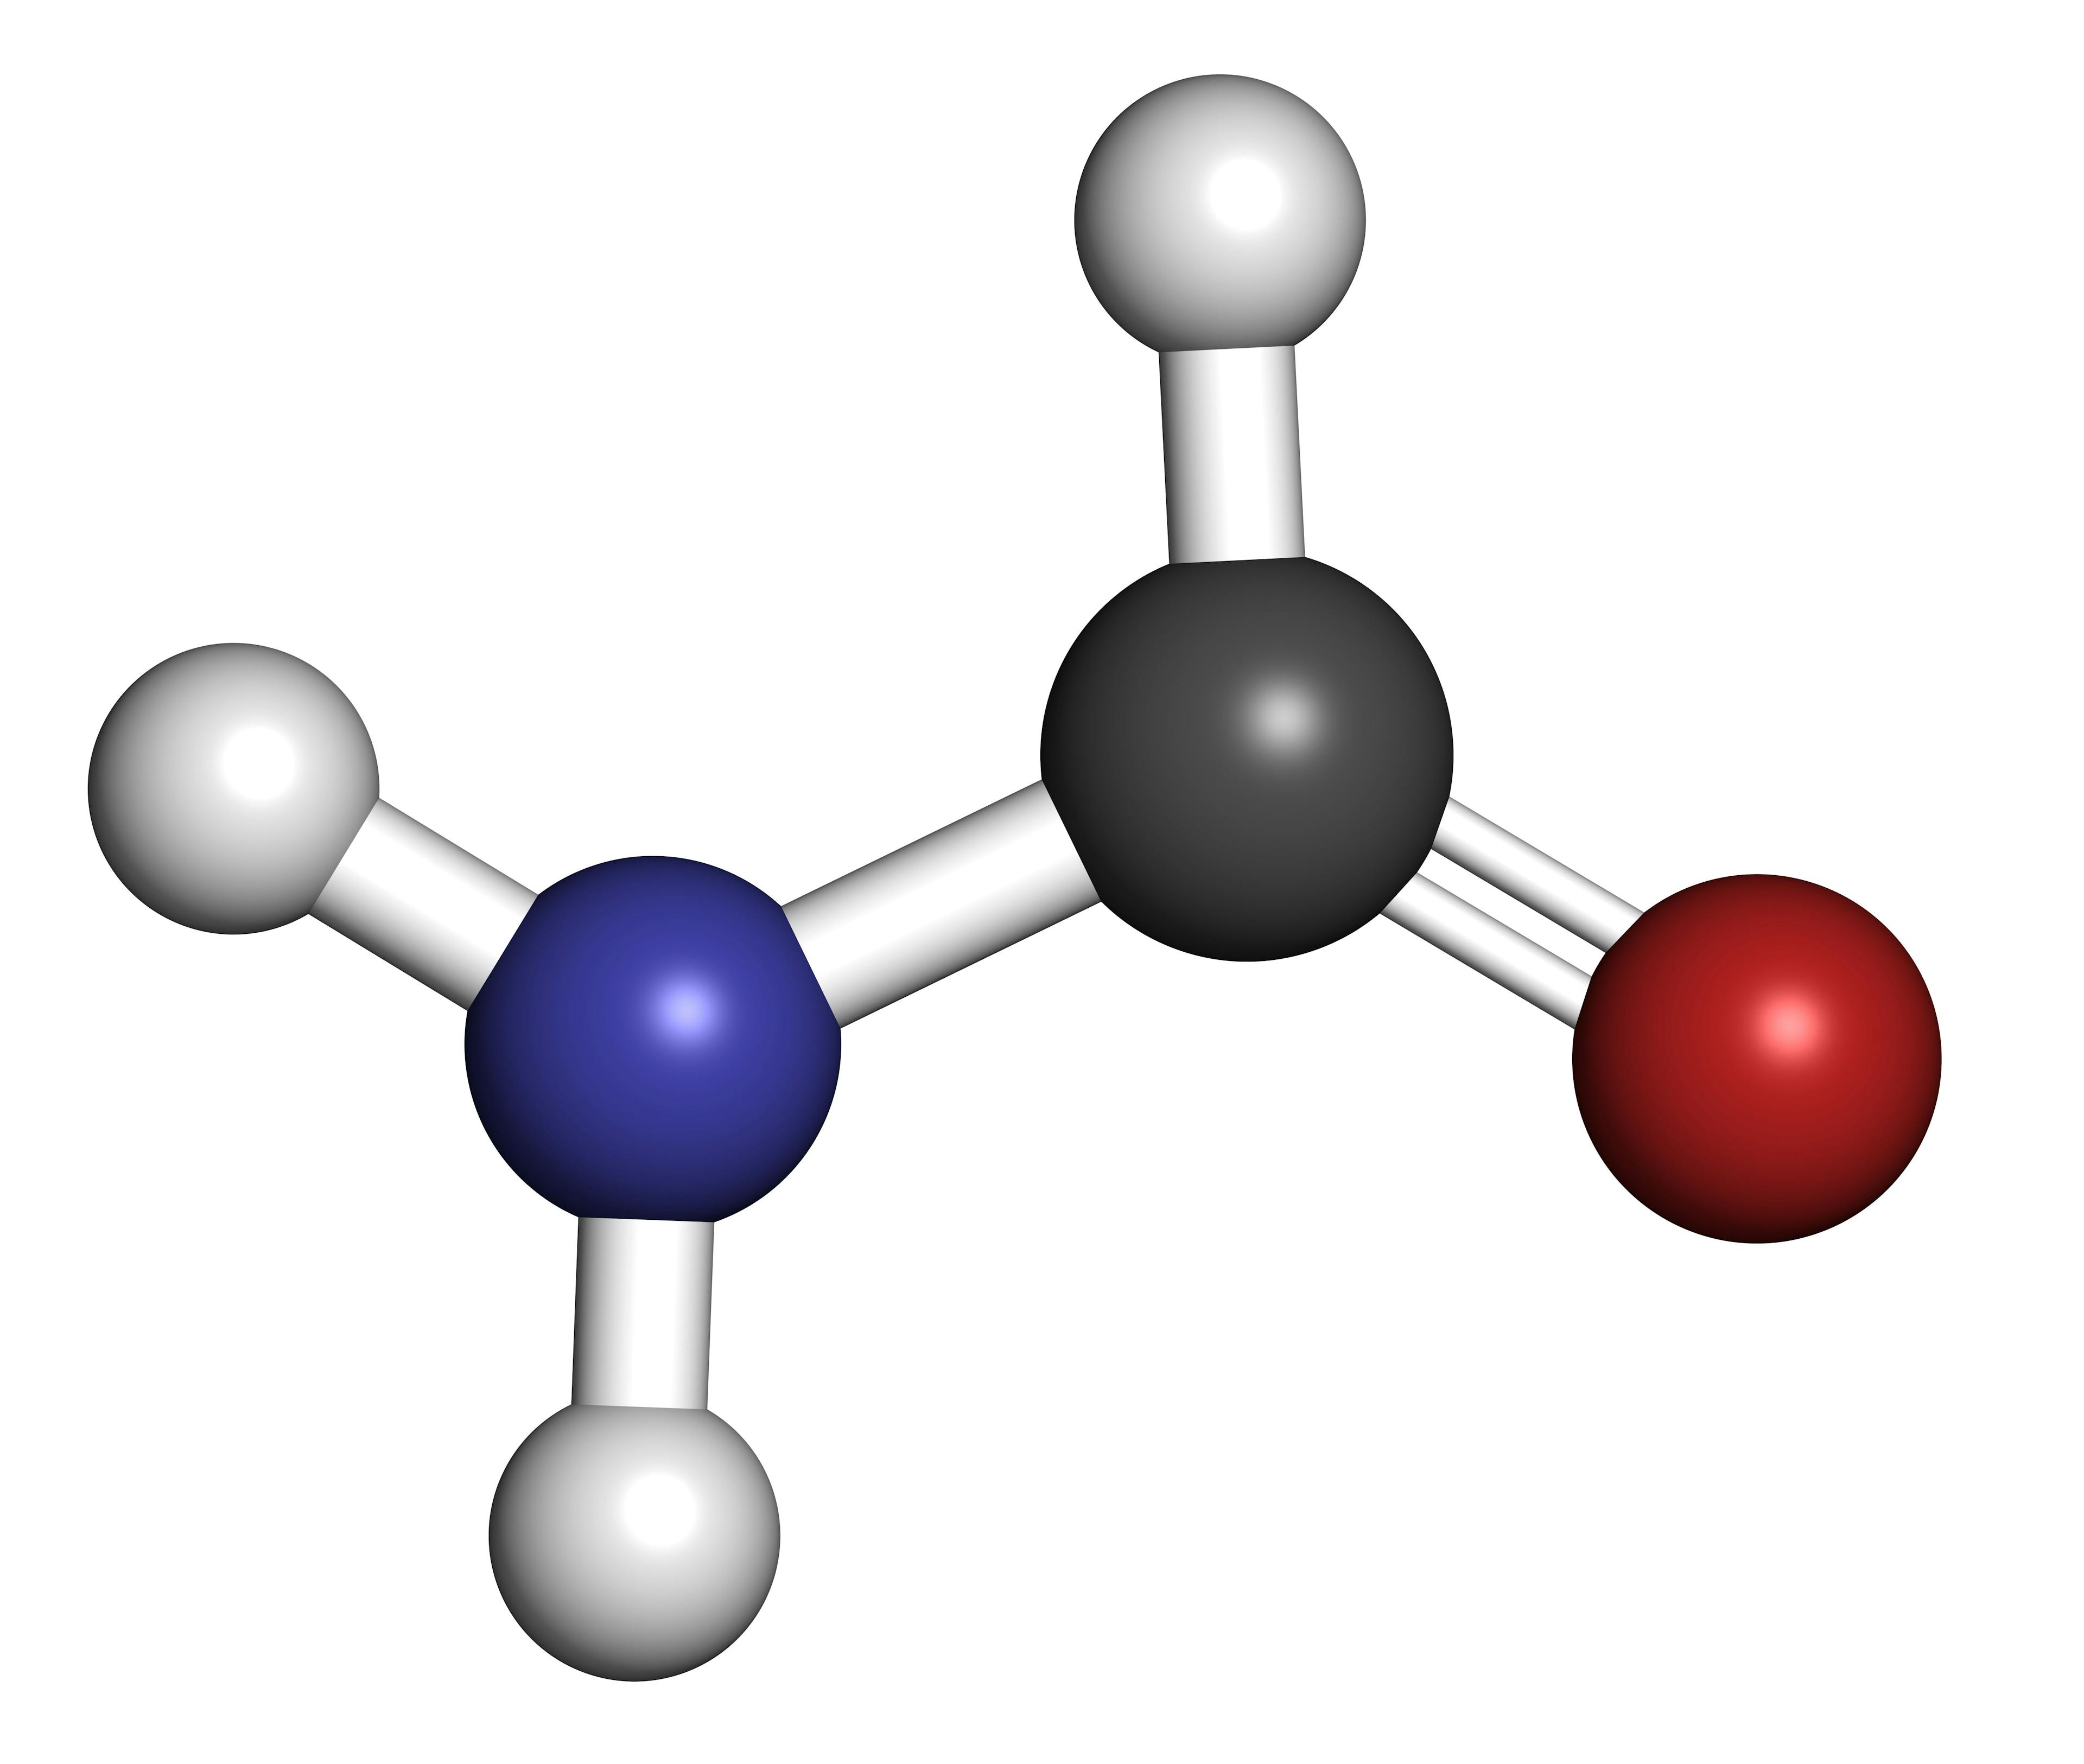 Formamide (methanamide) solvent molecule | Image Credit: © molekuul.be - stock.adobe.com